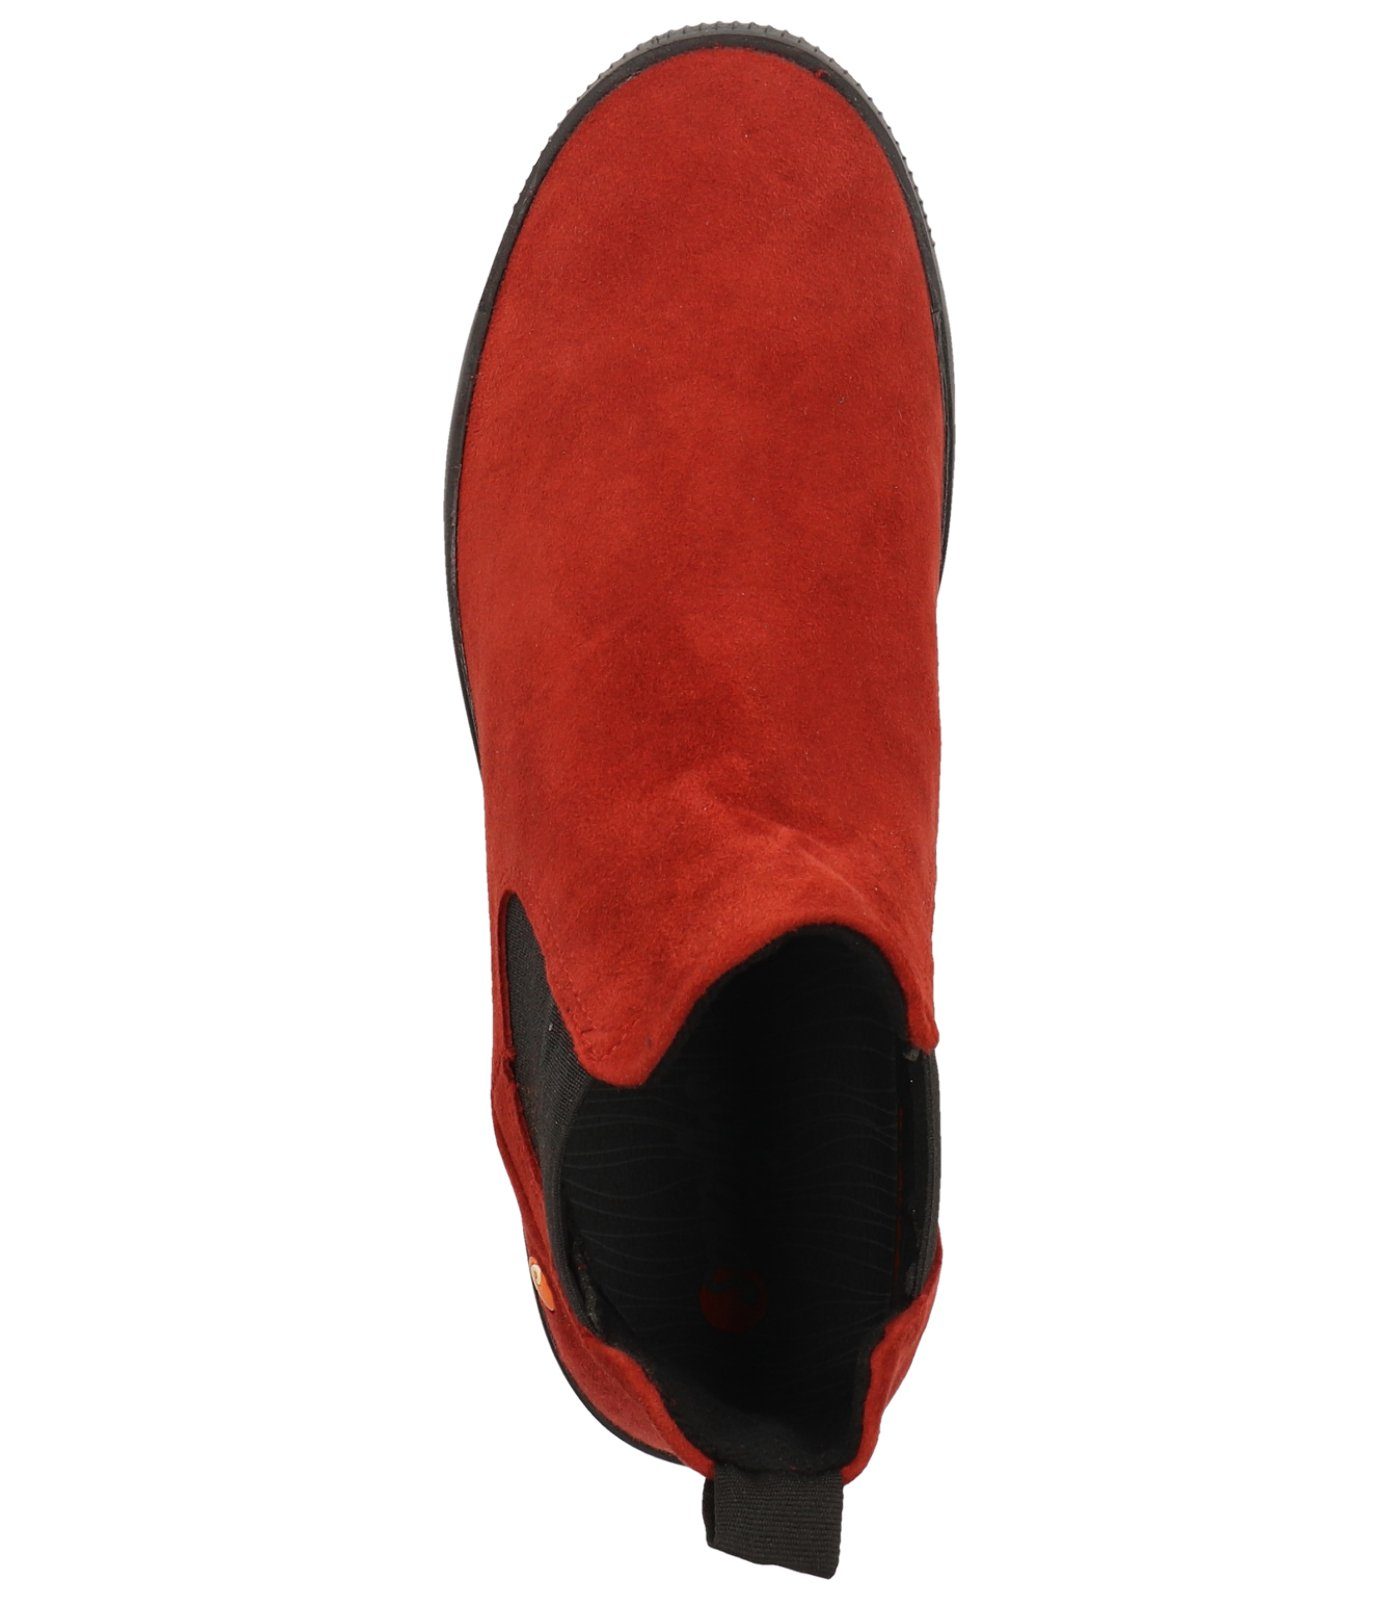 Red Stiefelette softinos Stiefelette Leder/Textil